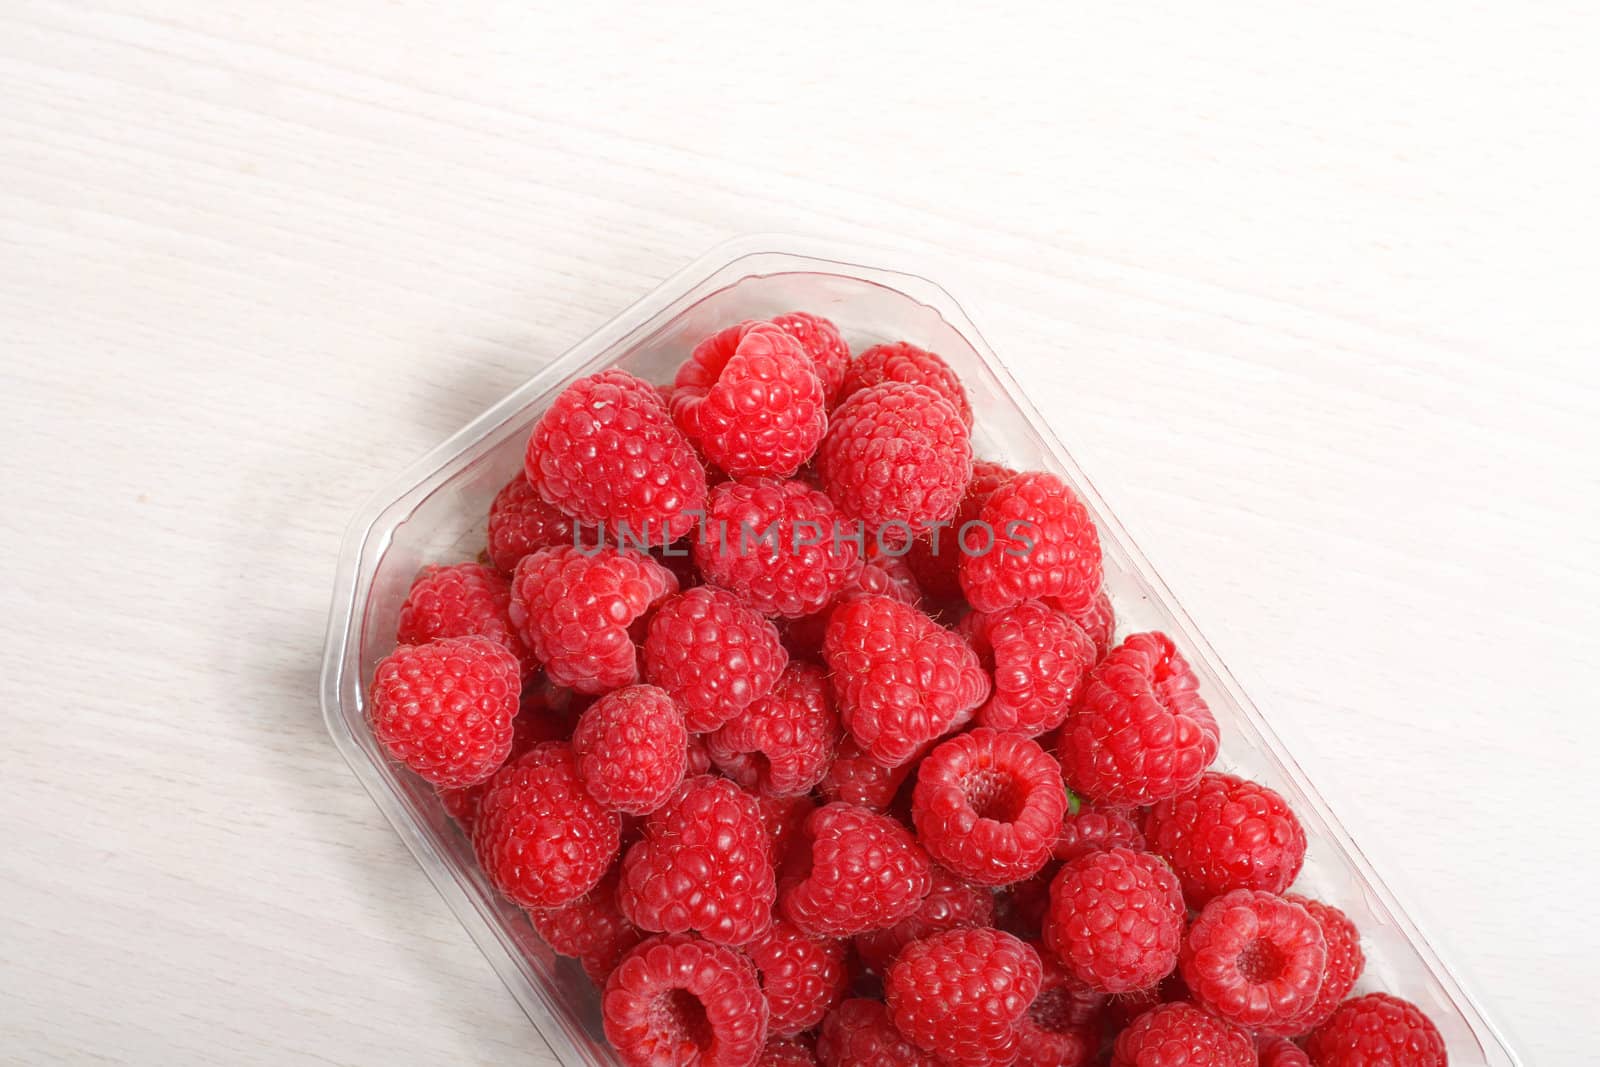 Raspberries in a bowl